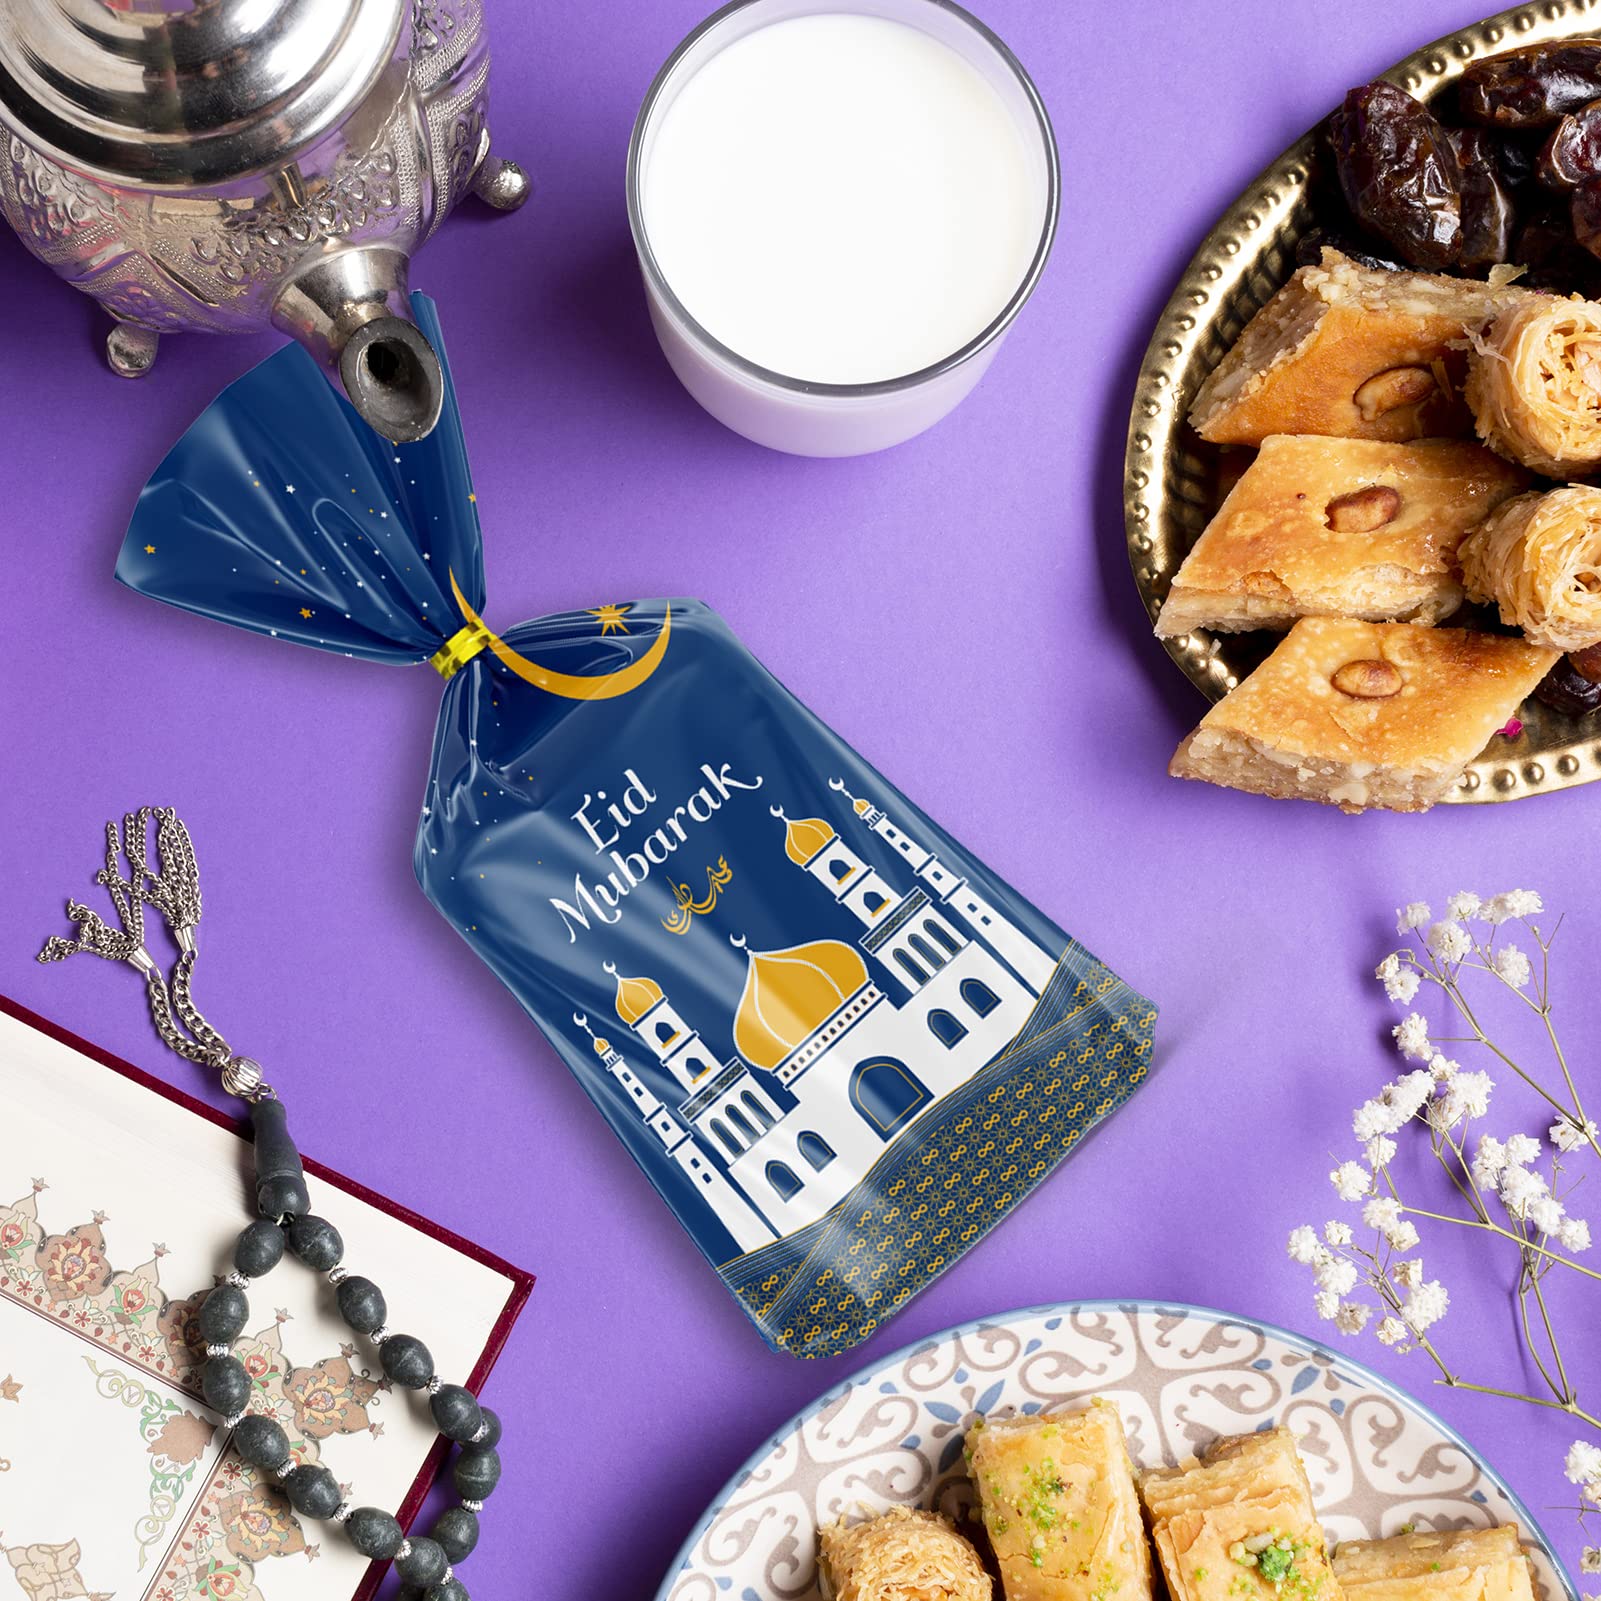 PopManko Eid Mubarak Party Treat Bags, 100Pcs Gift Bags, Ramadan Cellophane Favor Bags, Eid Mubarak Sweets Bags with Gold Ties for Home Eid Decorations, 27.5L* 12.5W